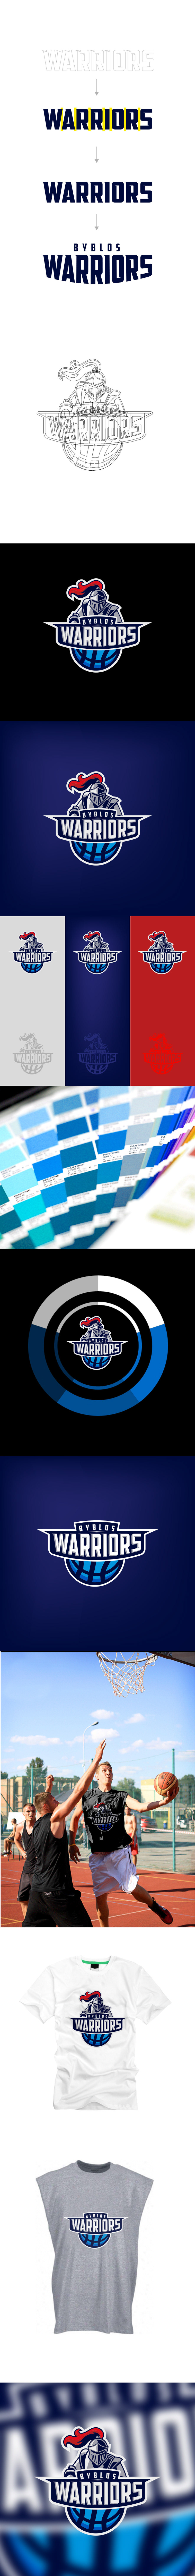 warriors blue colors basketball lebanon Byblos design